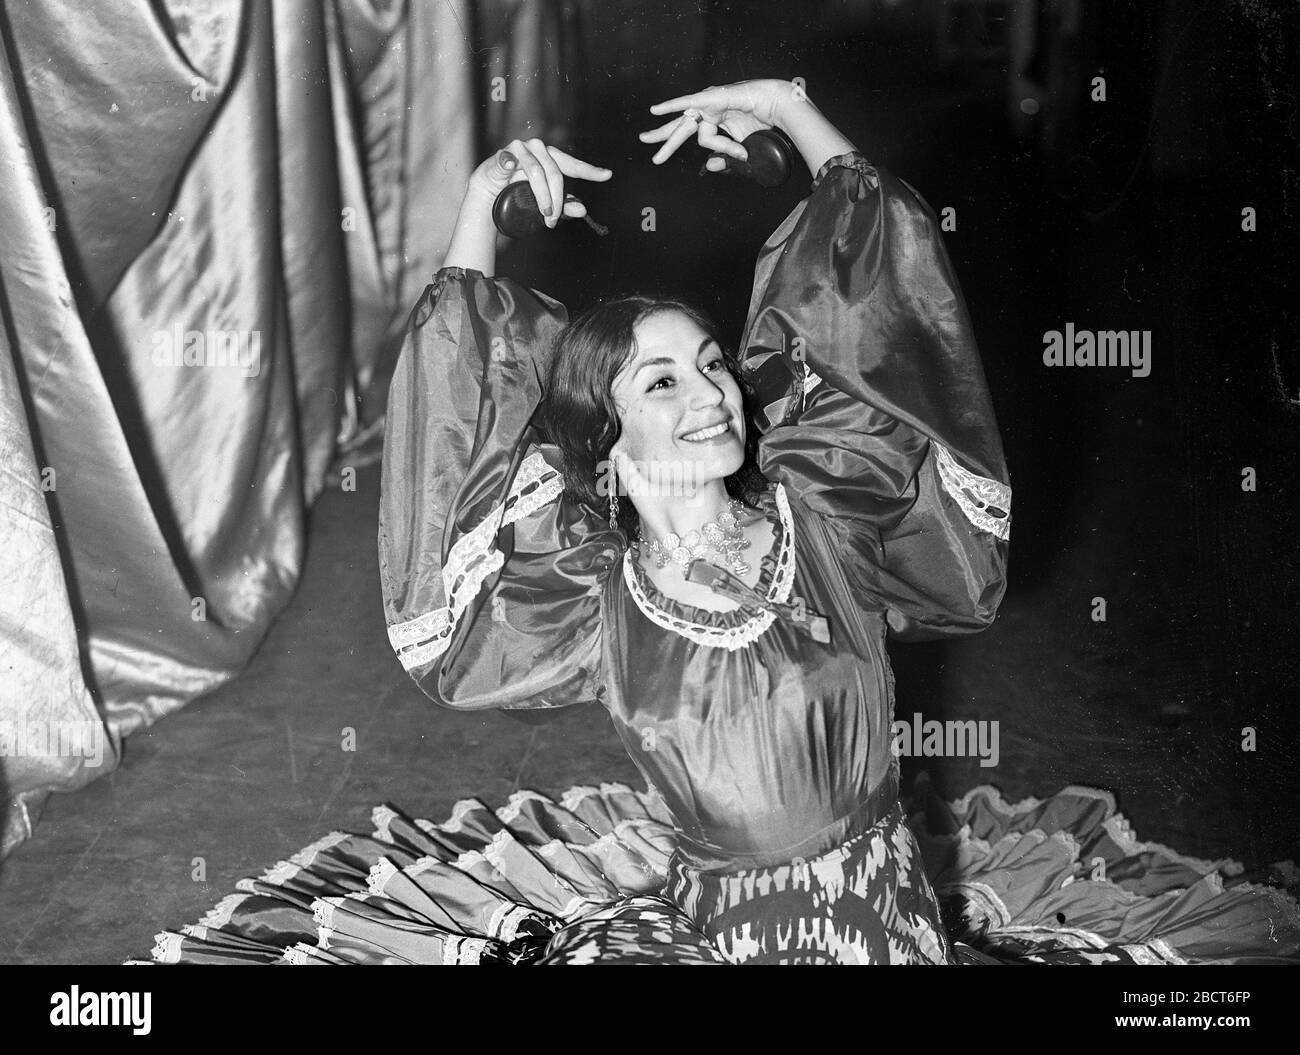 Actress 1950s dress hi-res stock photography and images - Alamy